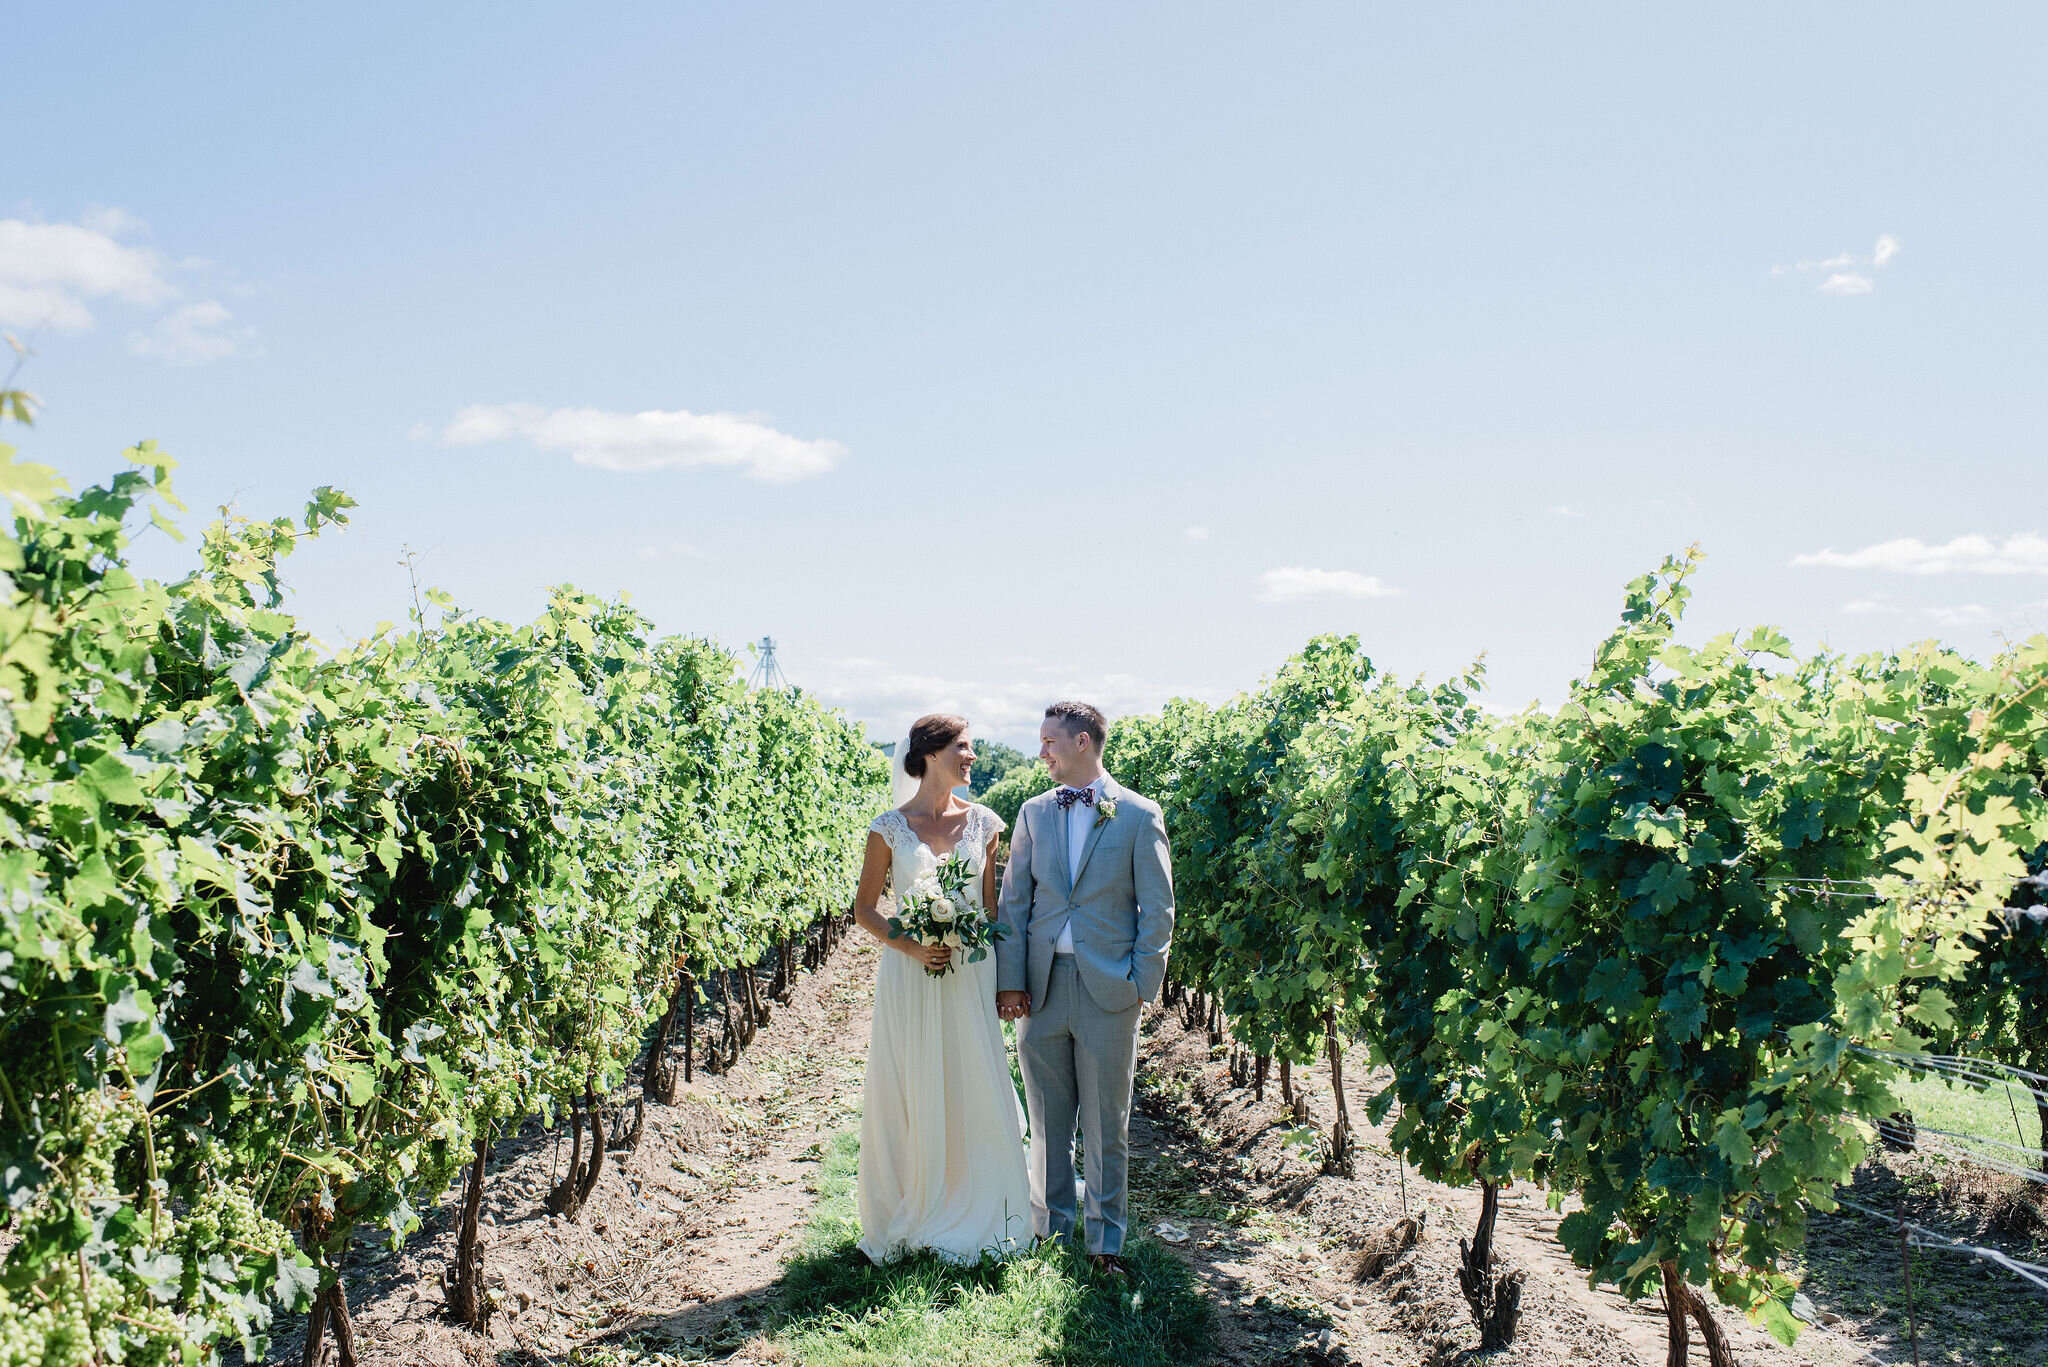 Honsberger-Estate-Wedding-Summer-Winery-Vineyard-Bride-Niagara-on-the-Lake-photos-by-Jacqueline-James-Photography-0042.JPG